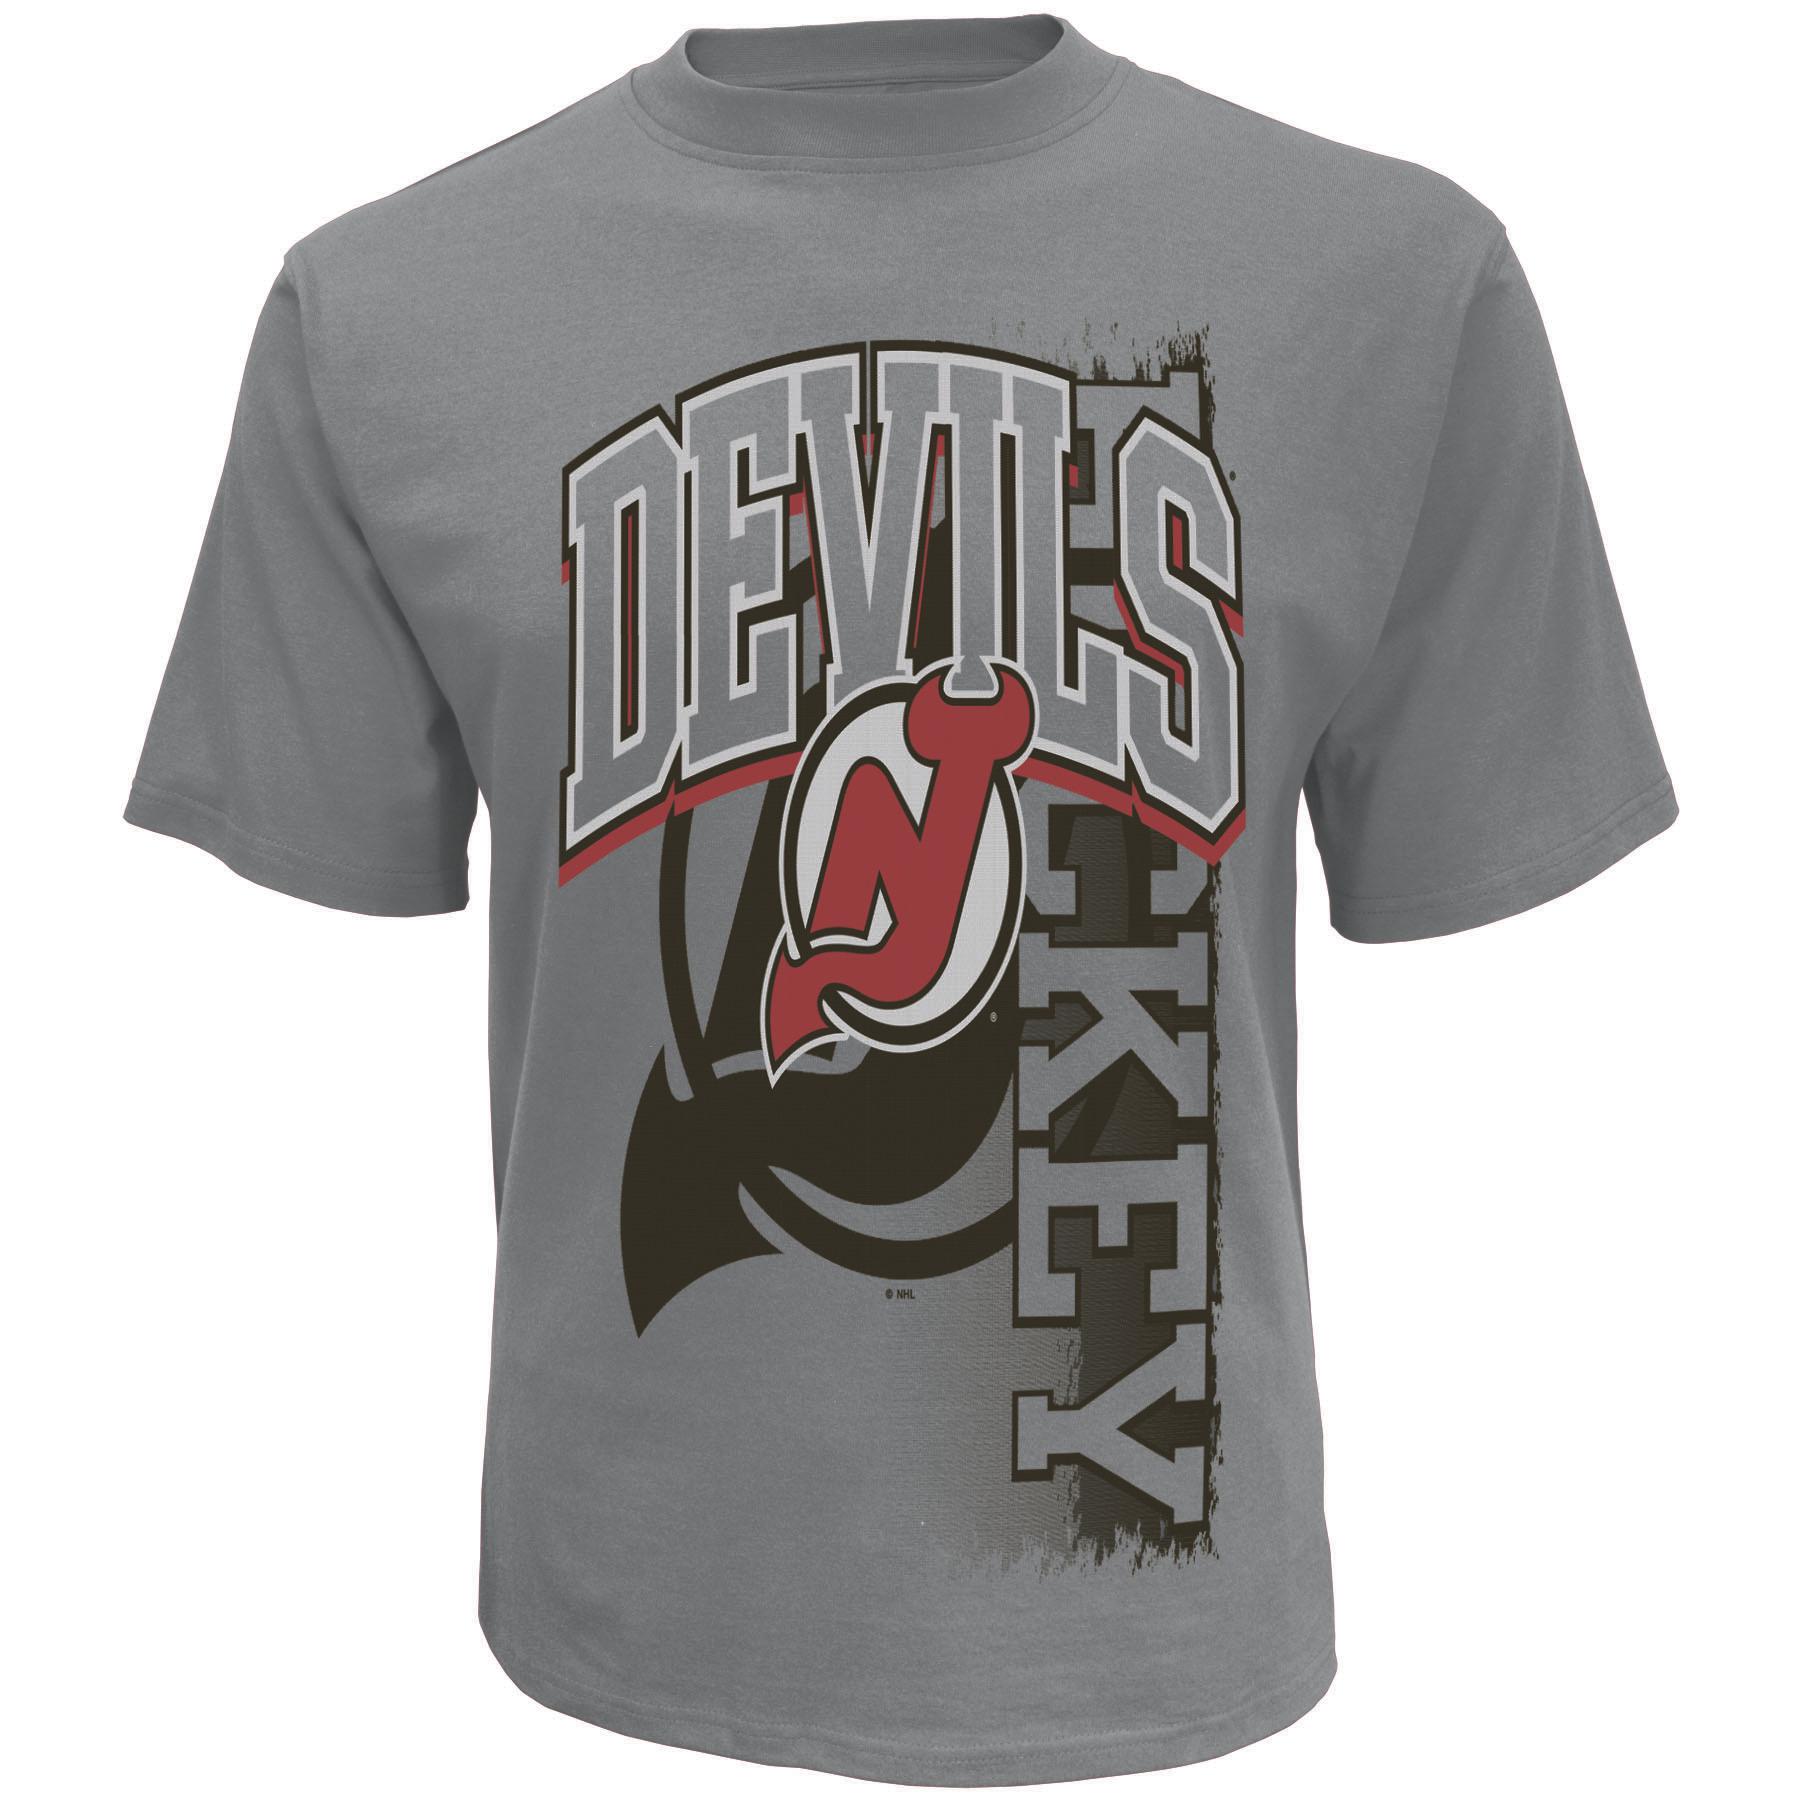 NHL Men's Big & Tall Graphic T-Shirt - New Jersey Devils